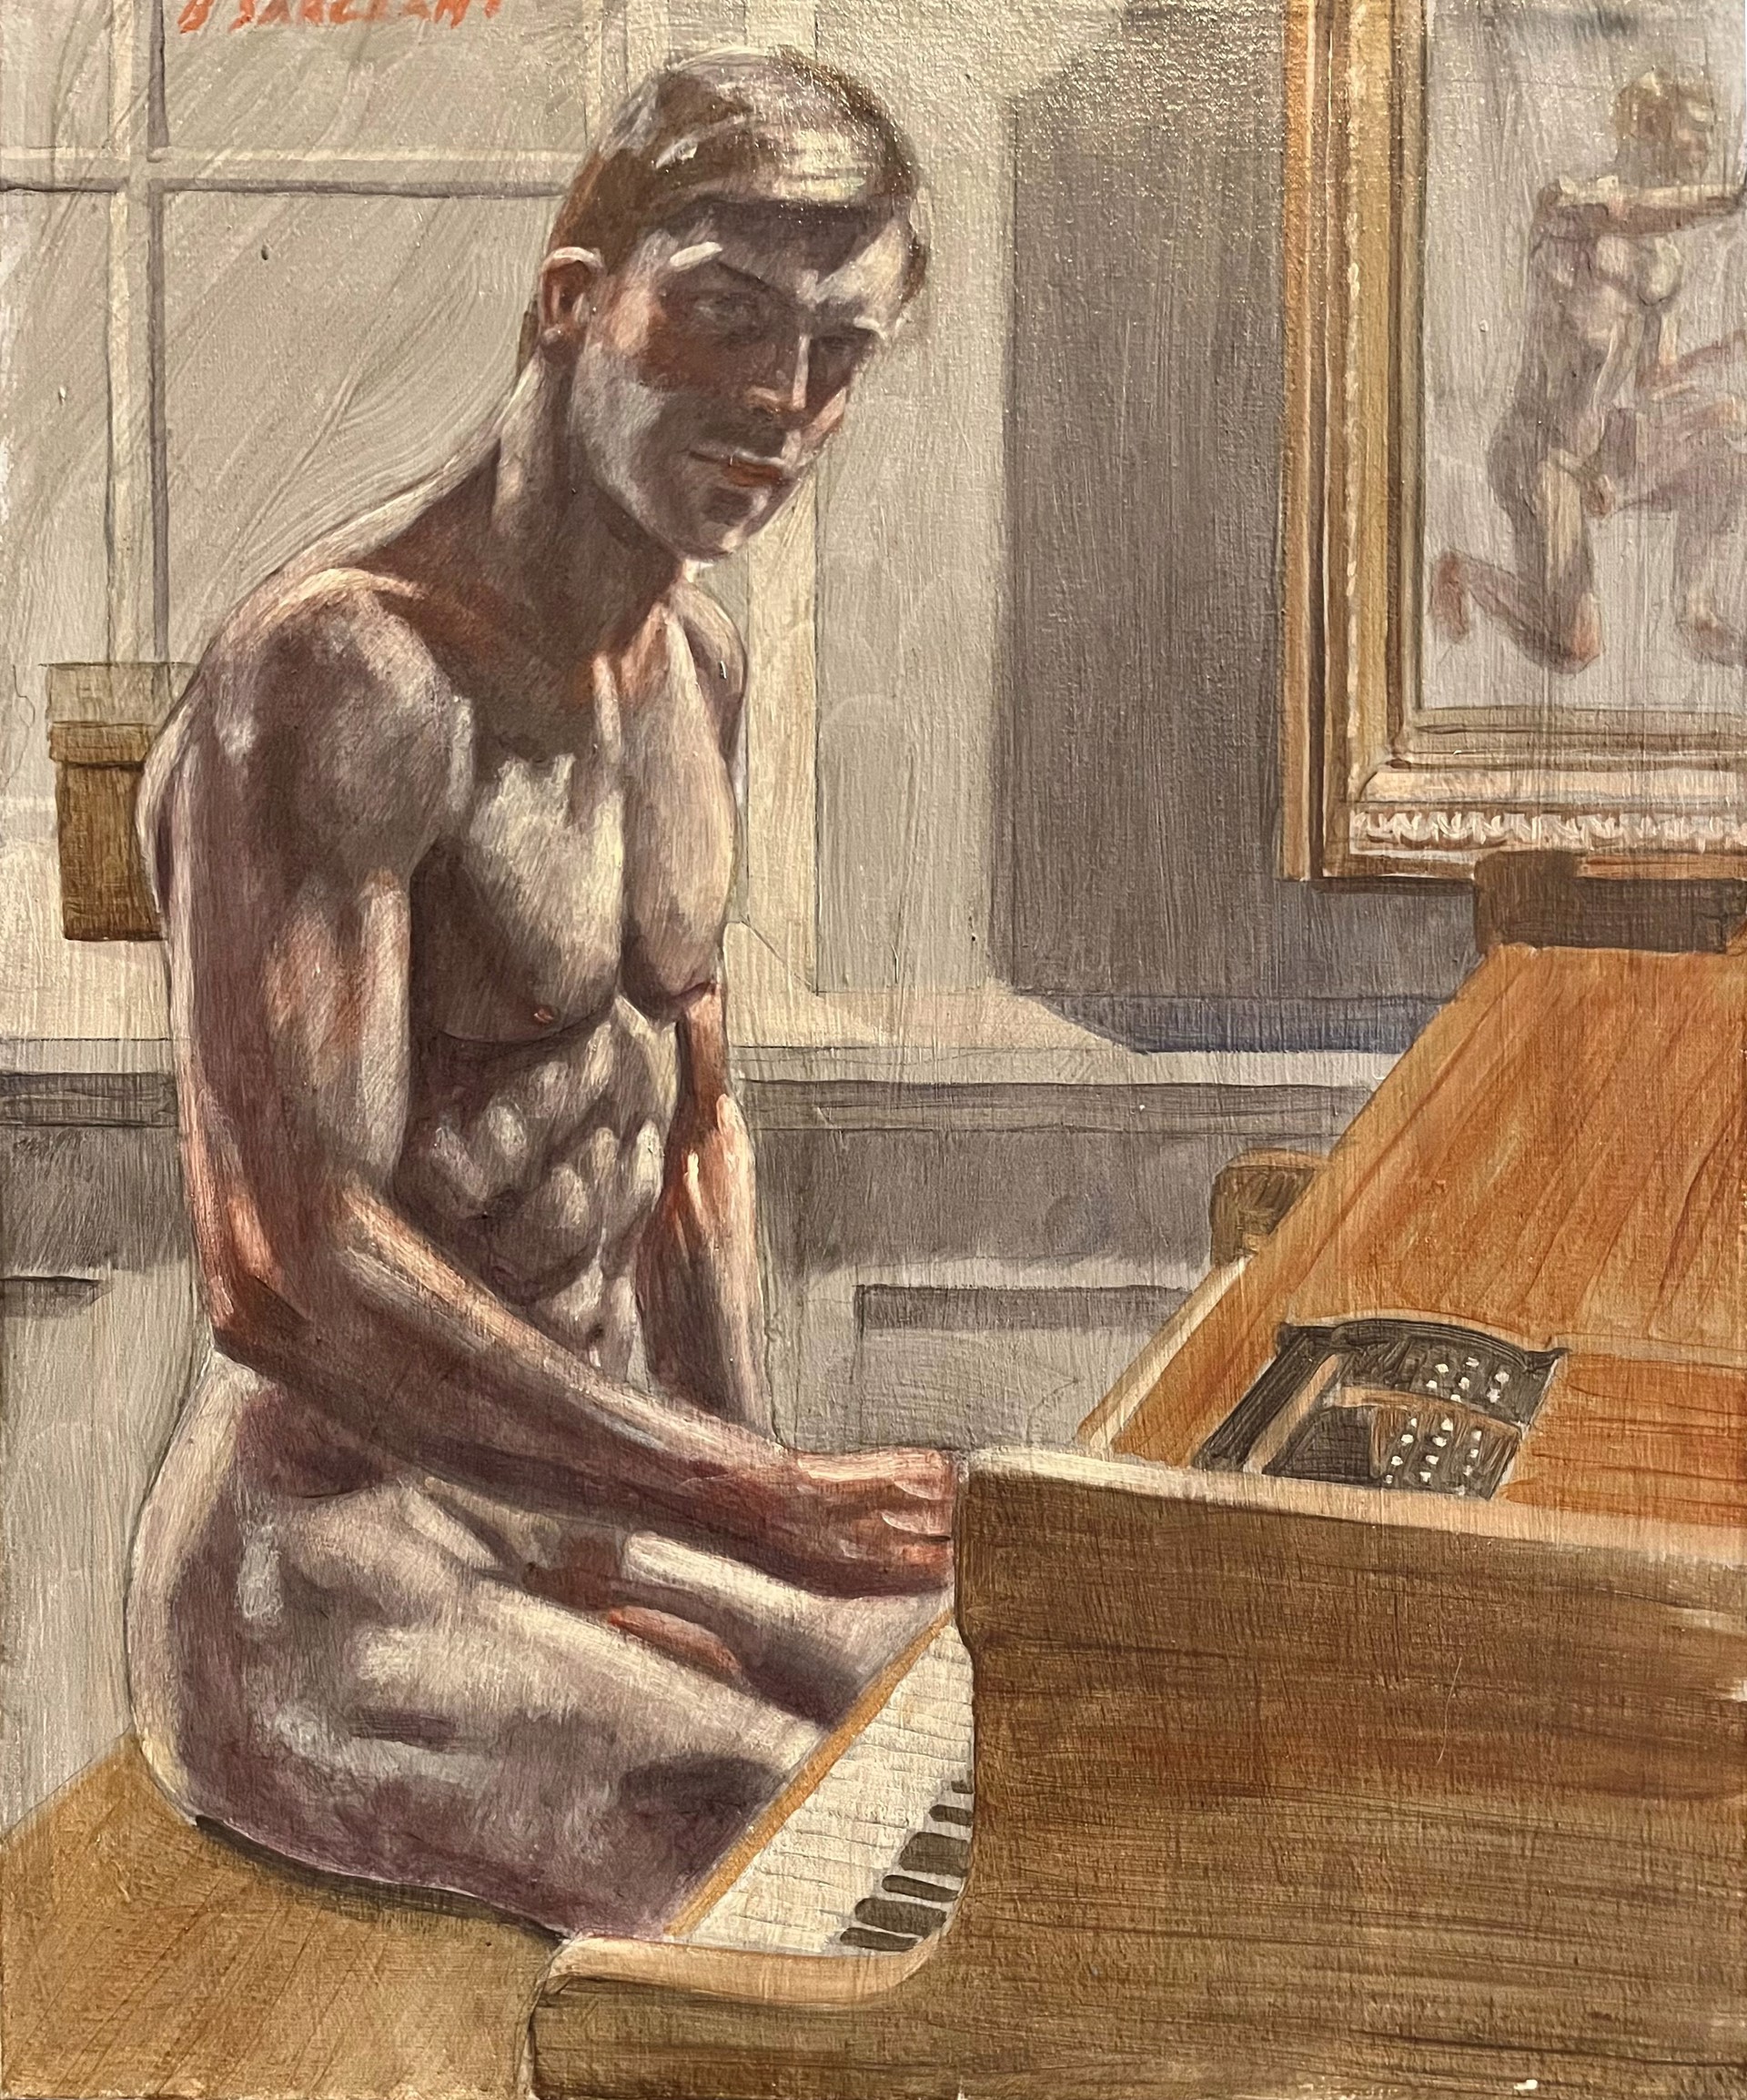 At the Piano by Mark Beard